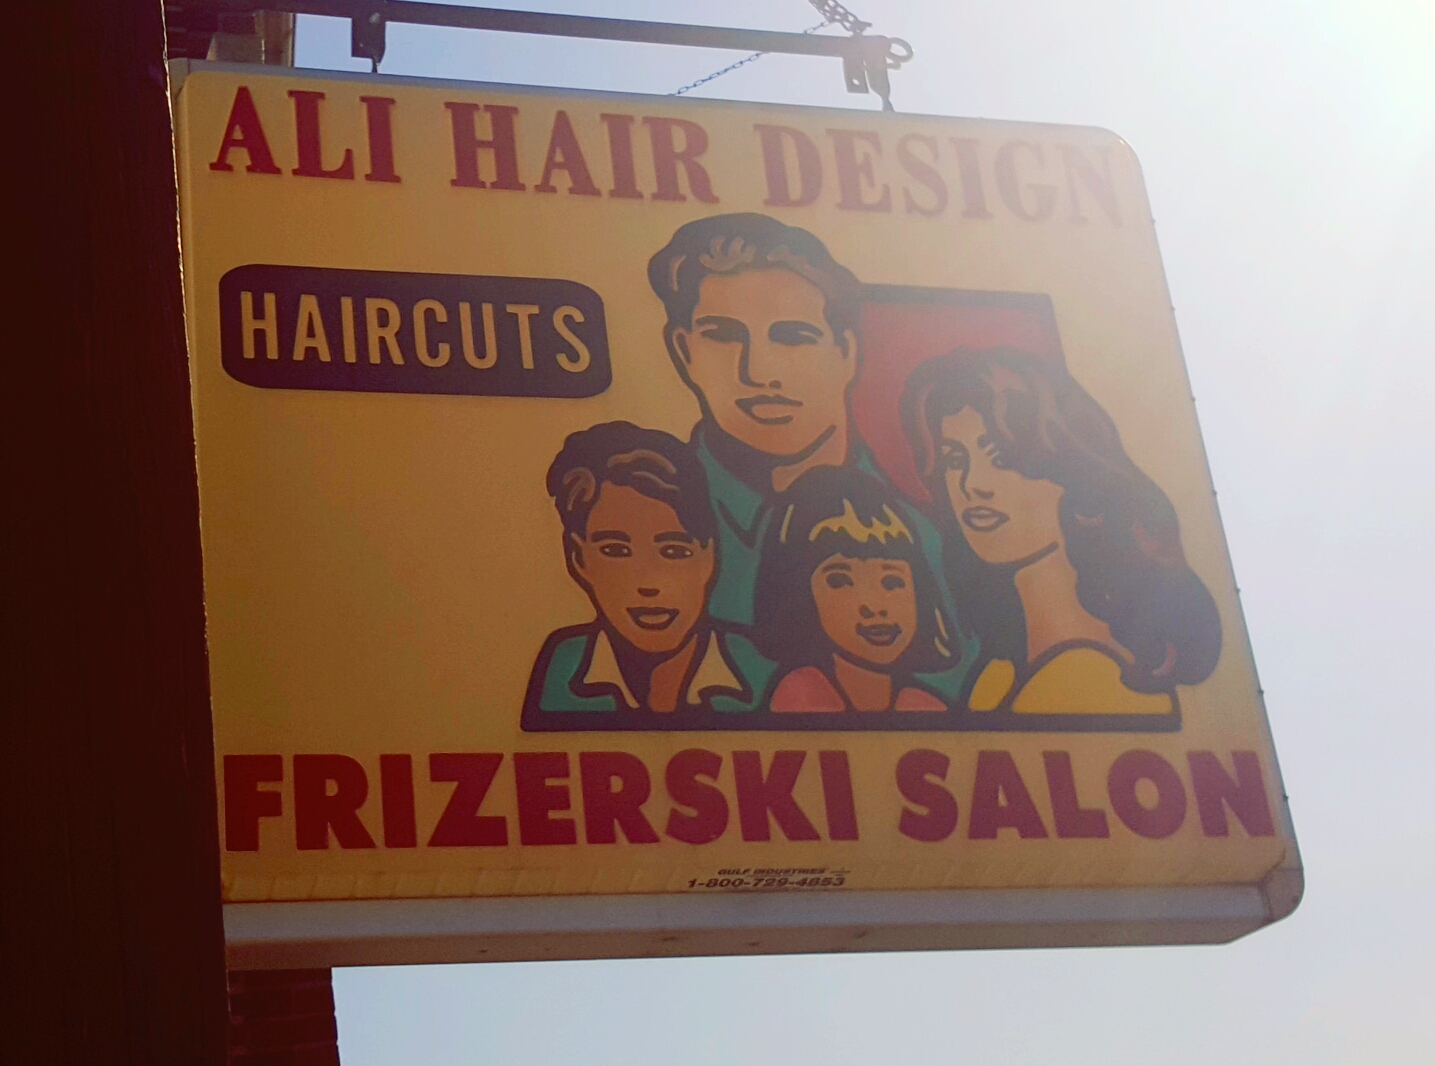 Ali Hair Design